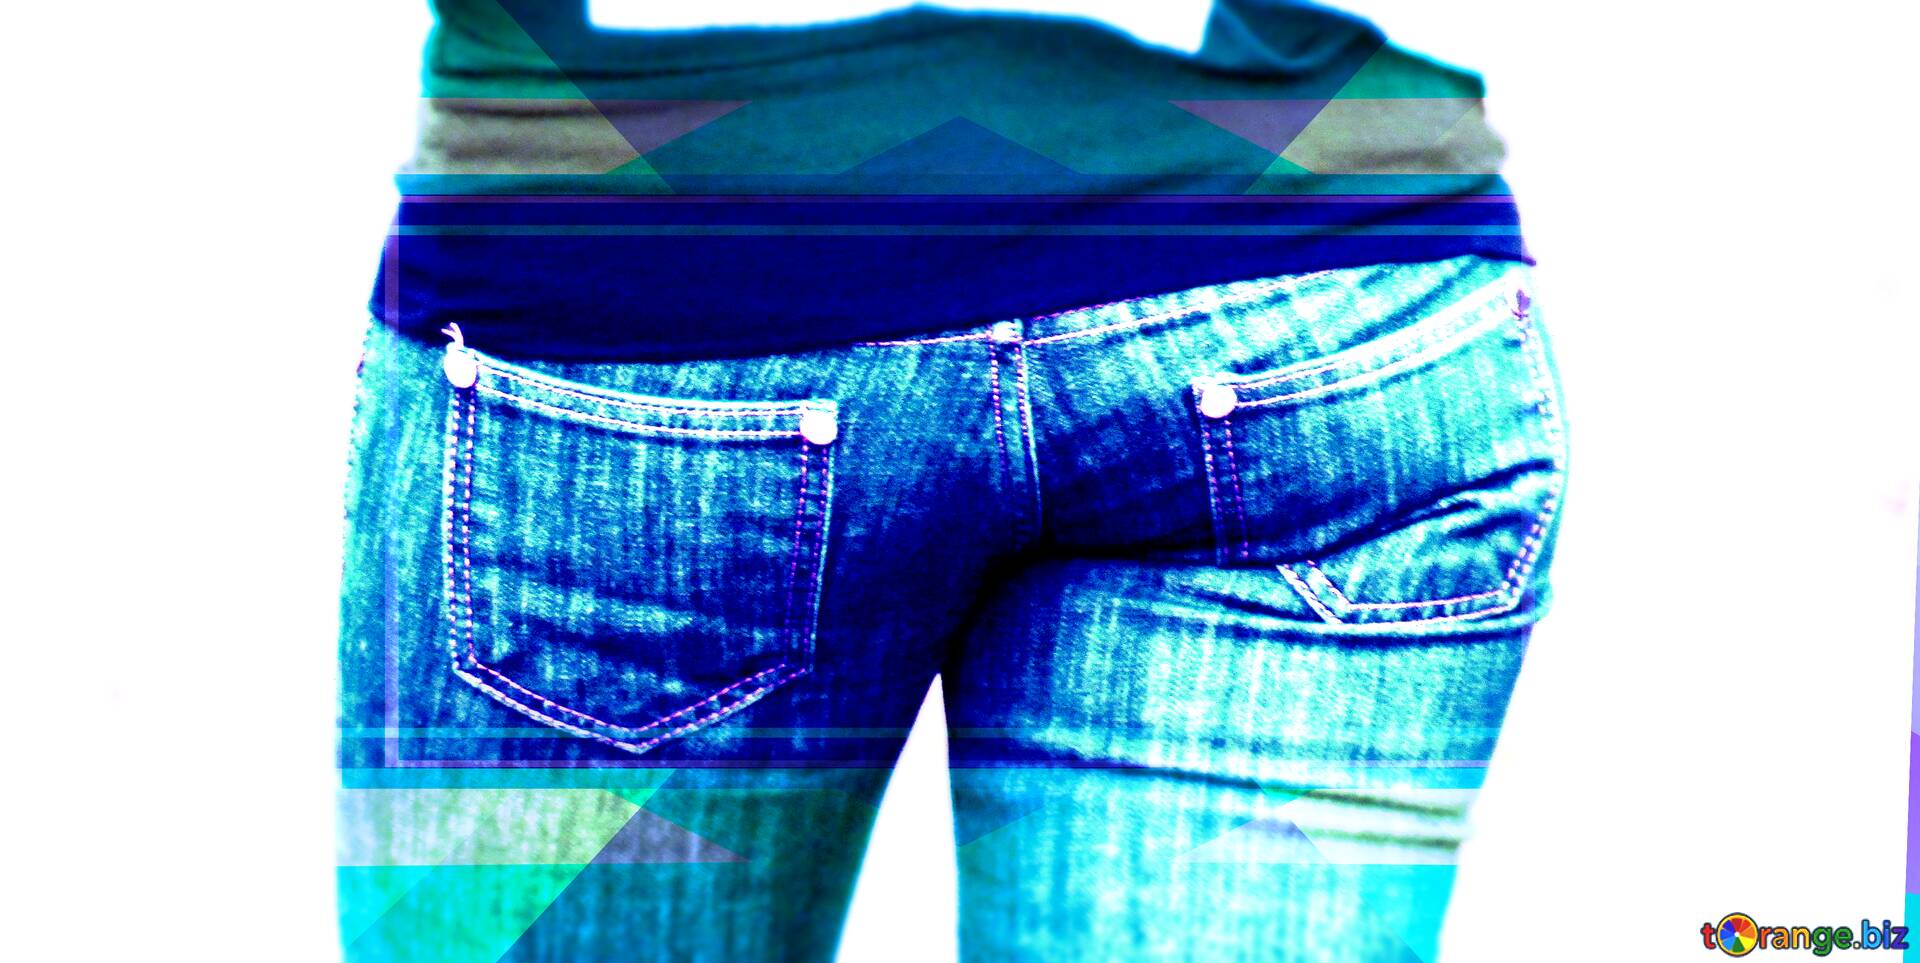 Tight jeans girls amazing